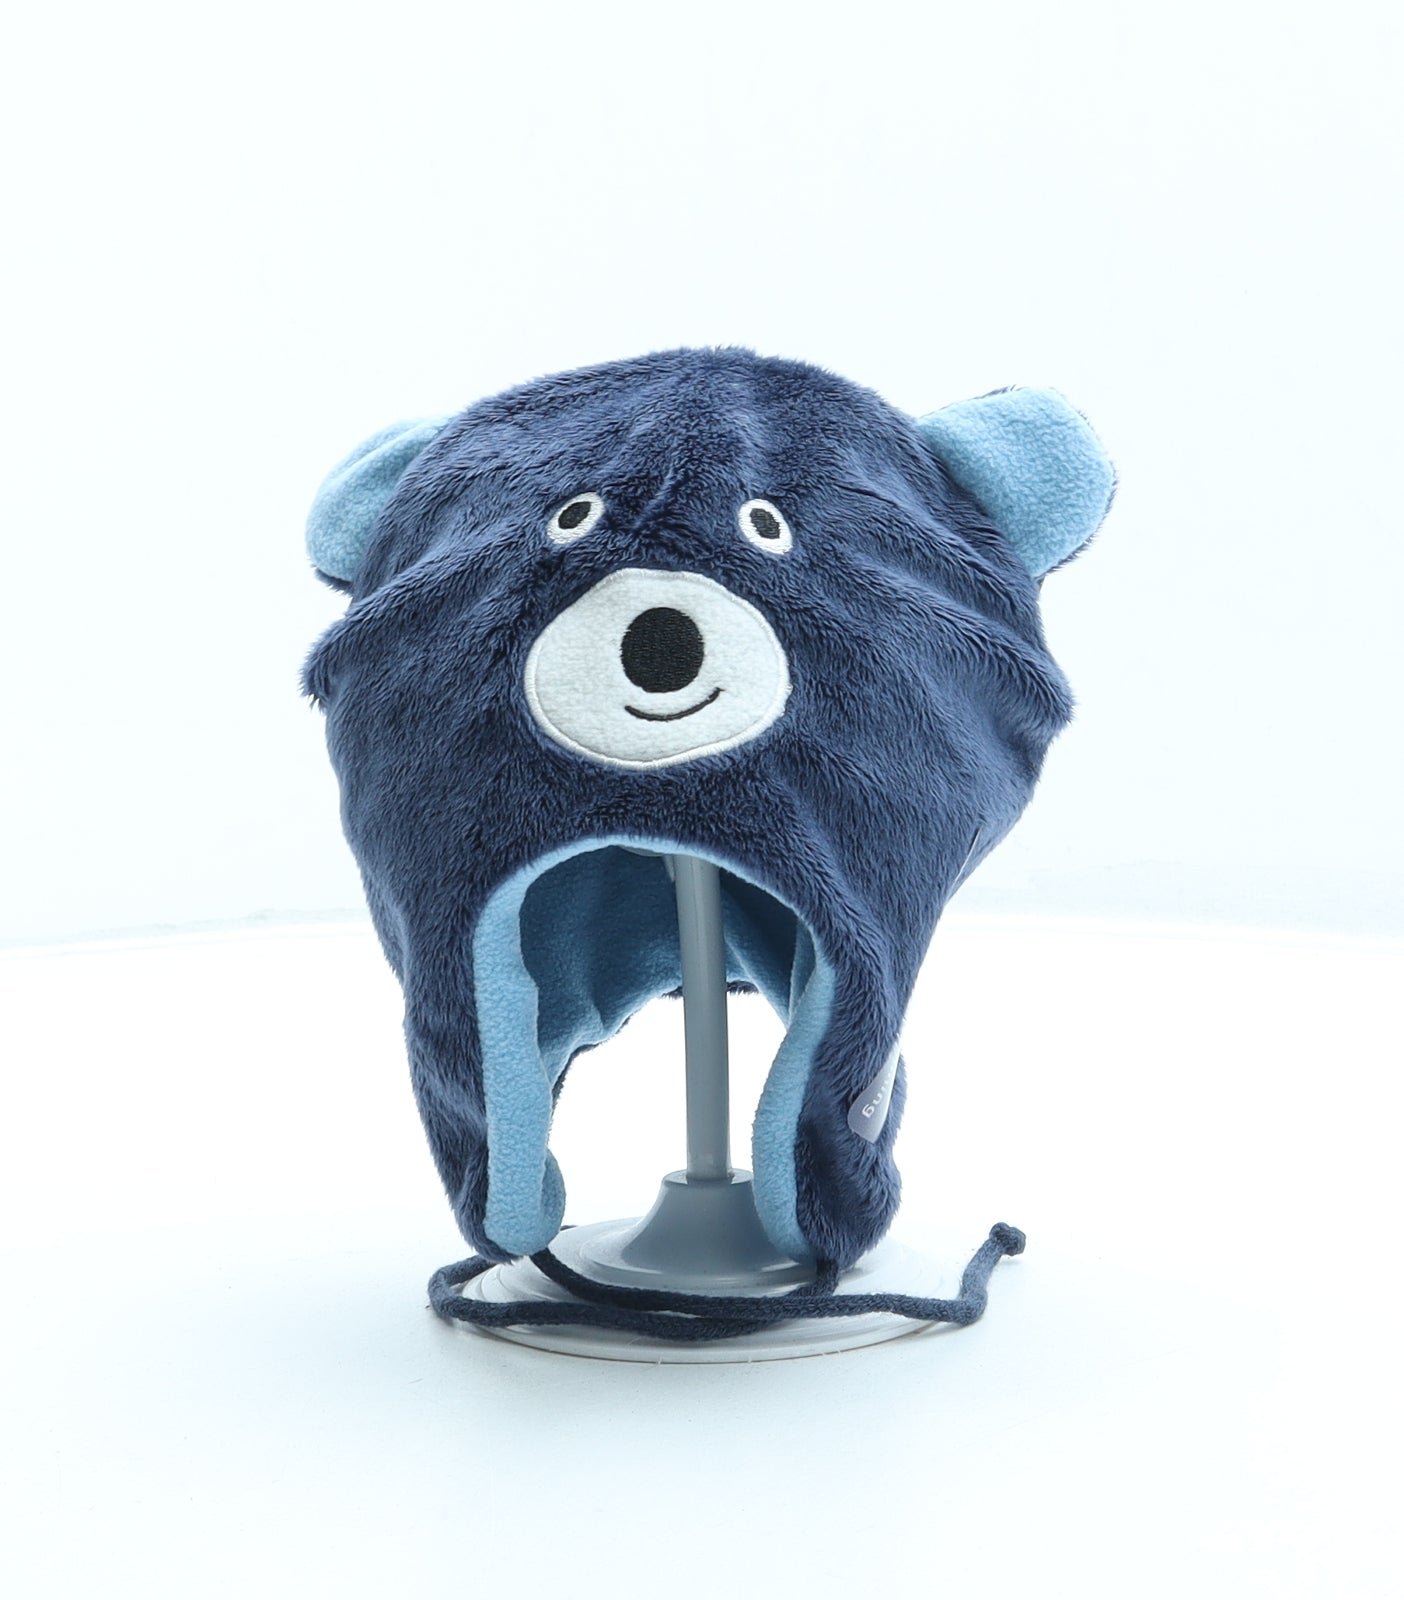 Lupilu Boys Blue Polyester Bonnet One Size - Bear design